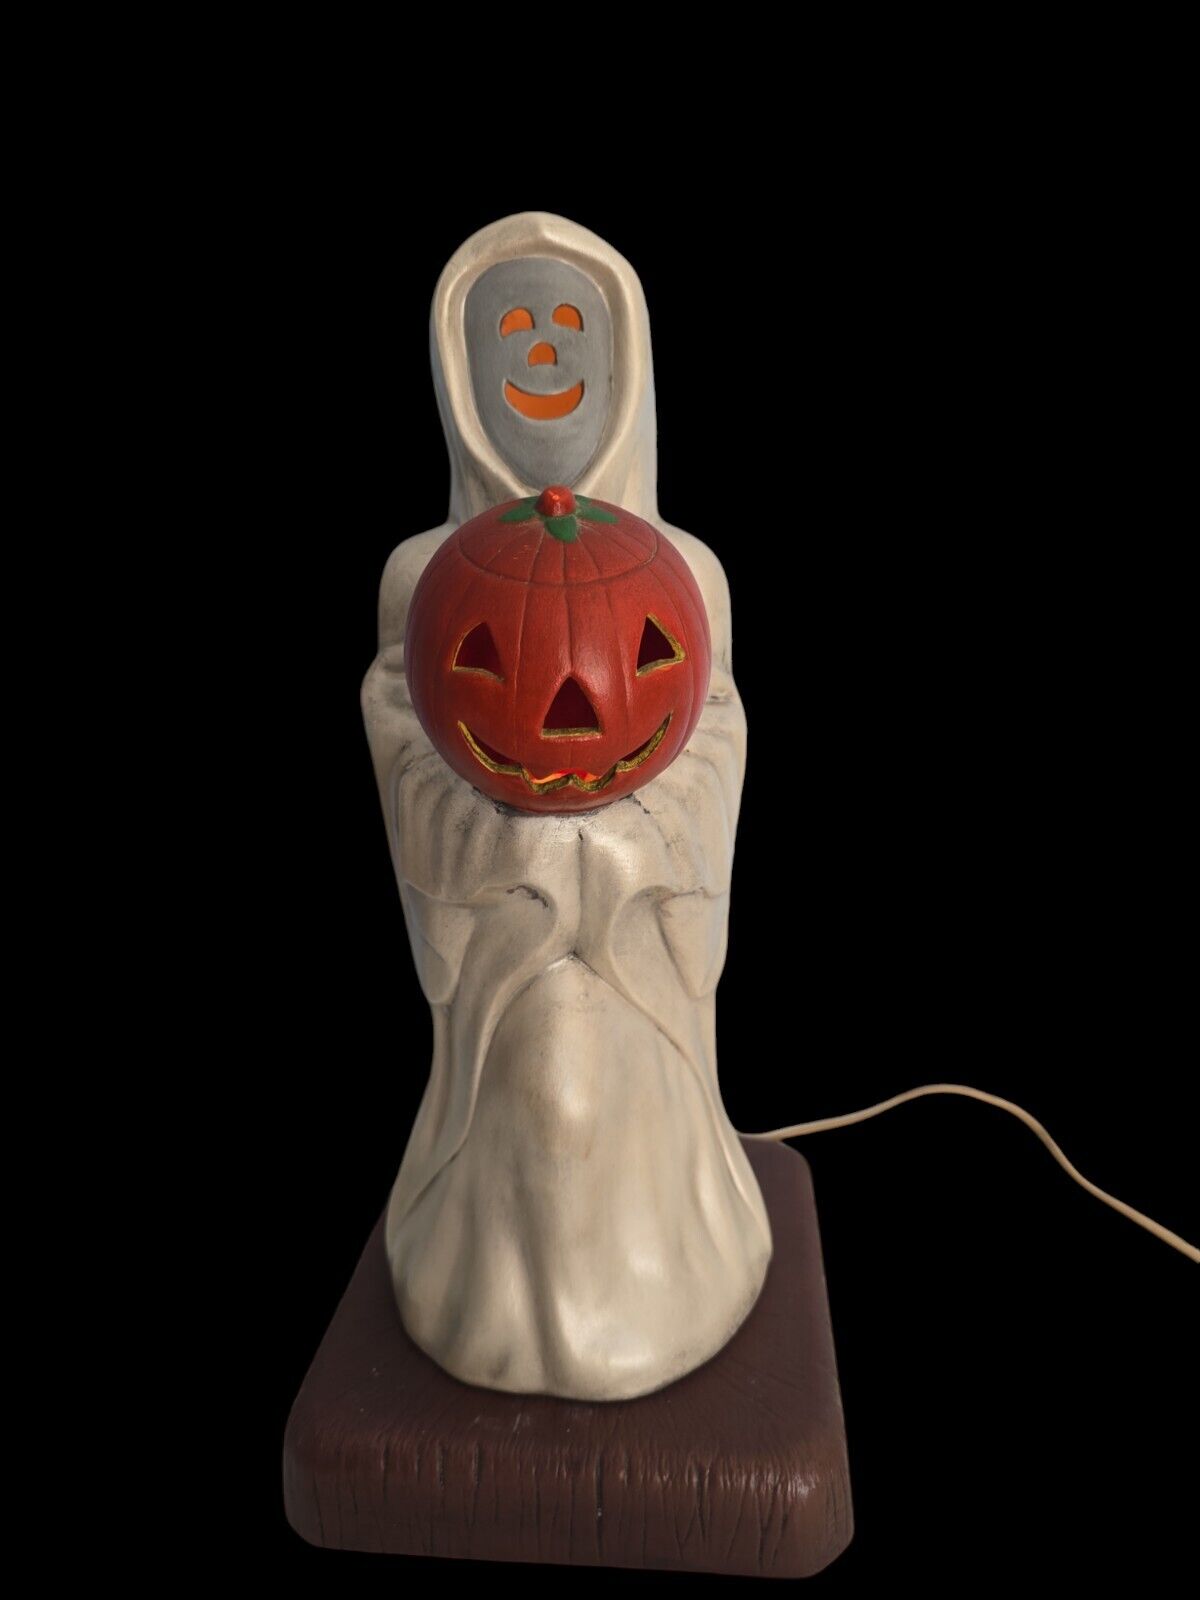 Vintage Holland Mold? Ghost Holding Pumpkin Light Up Ceramic Figurine with Base